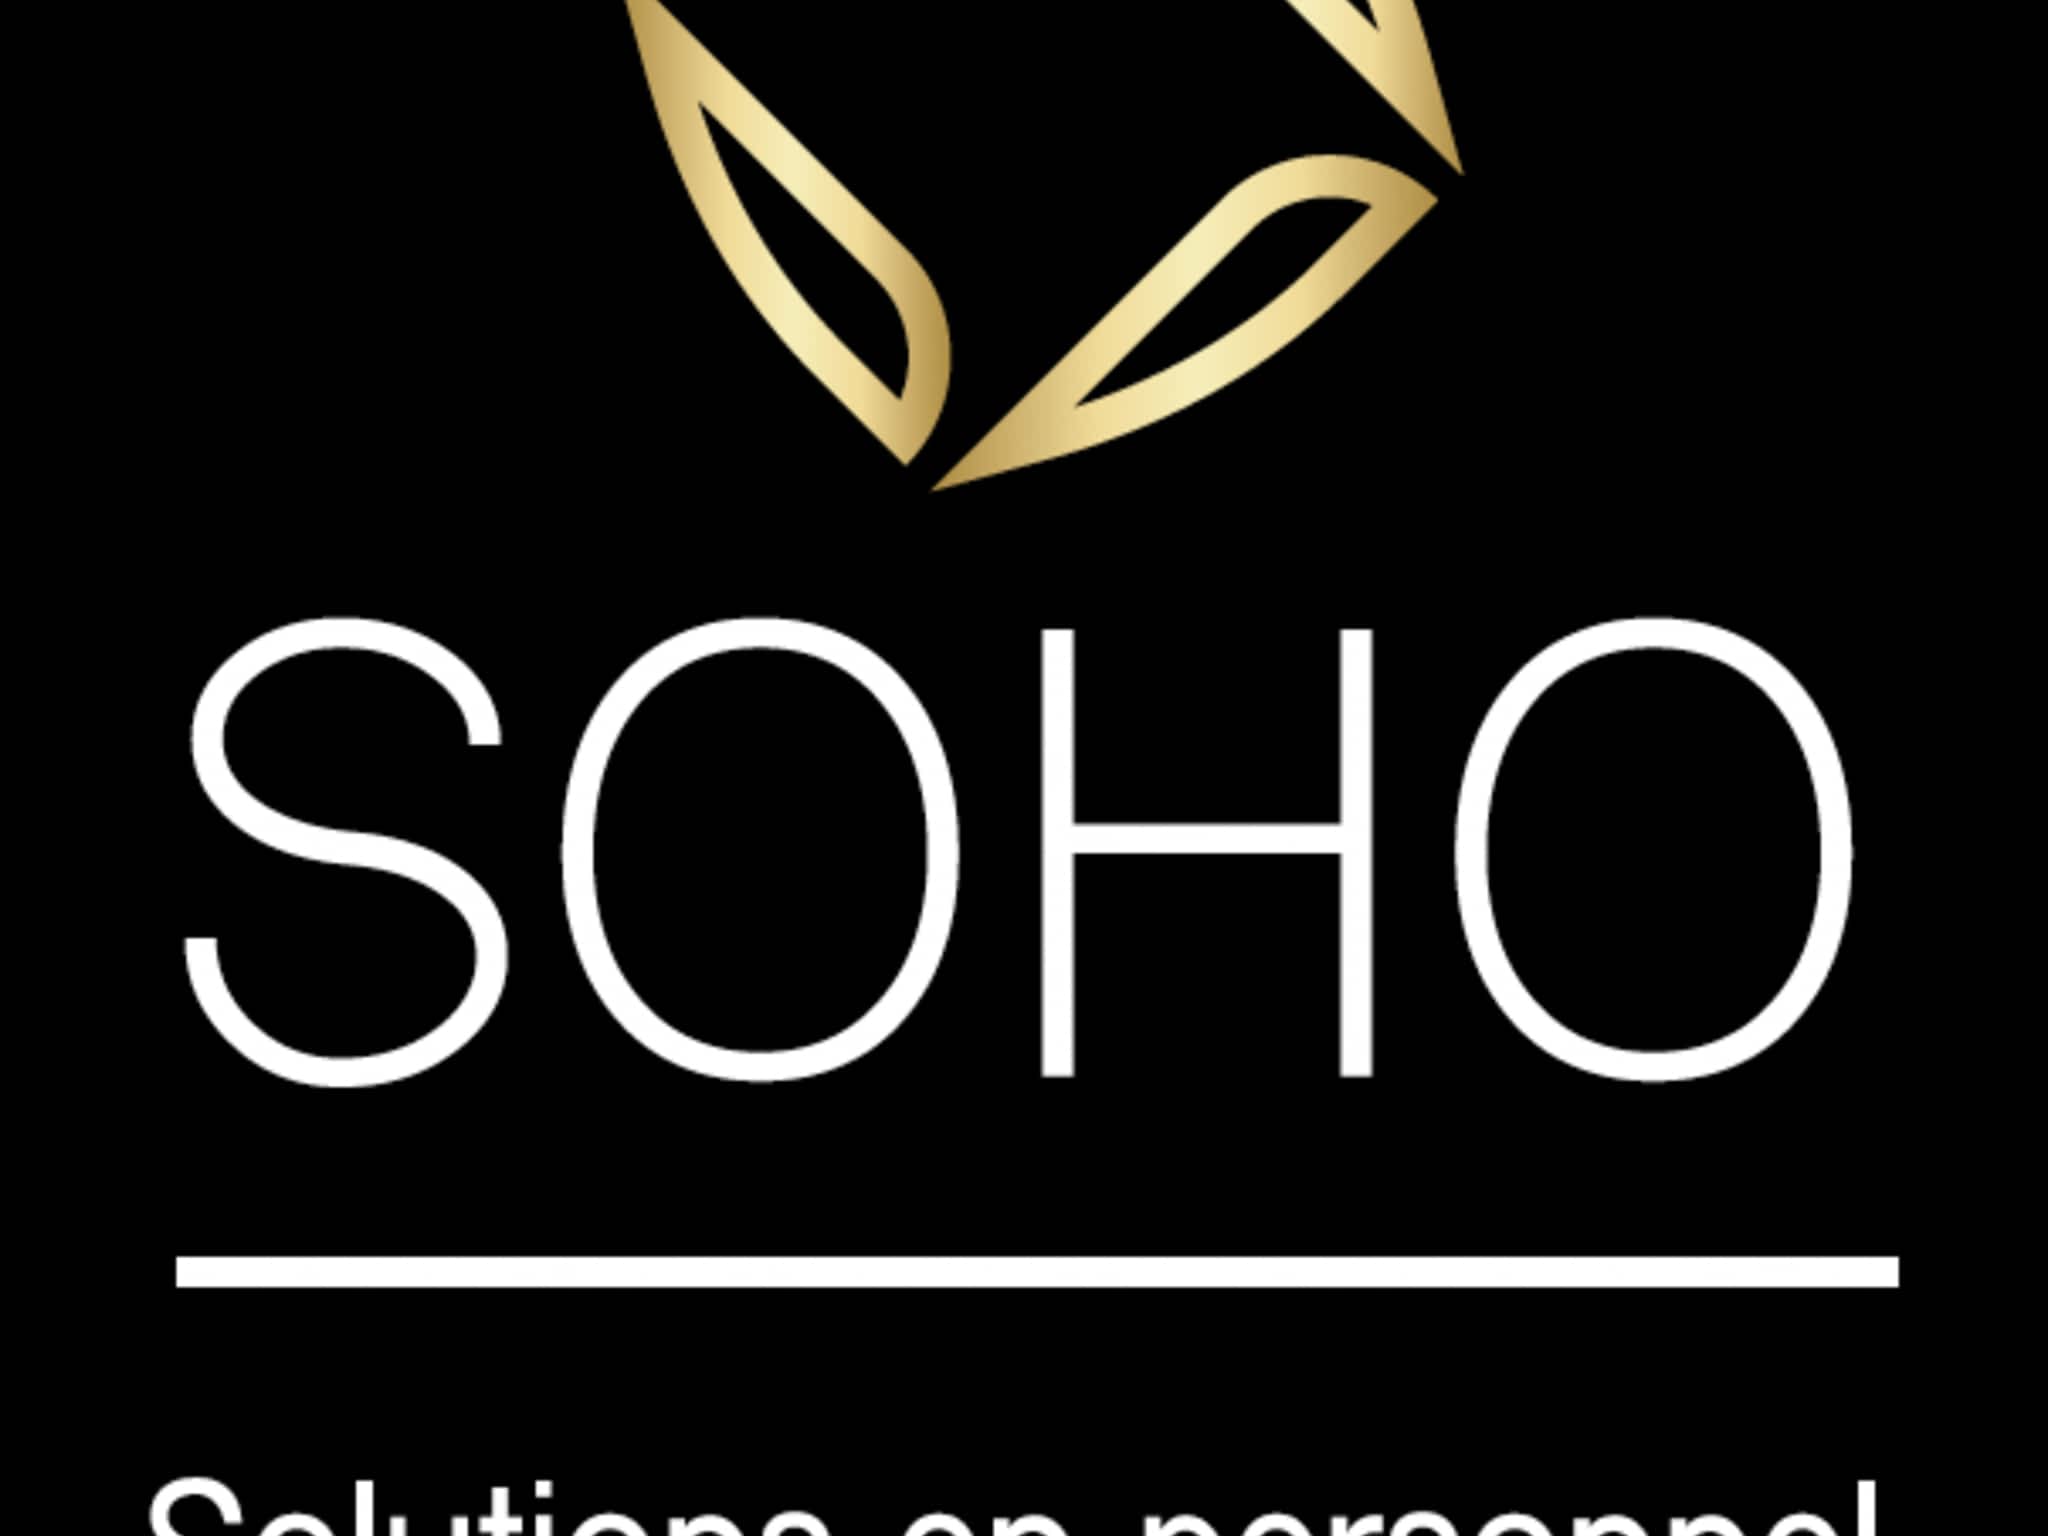 photo SOHO Solutions en personnel